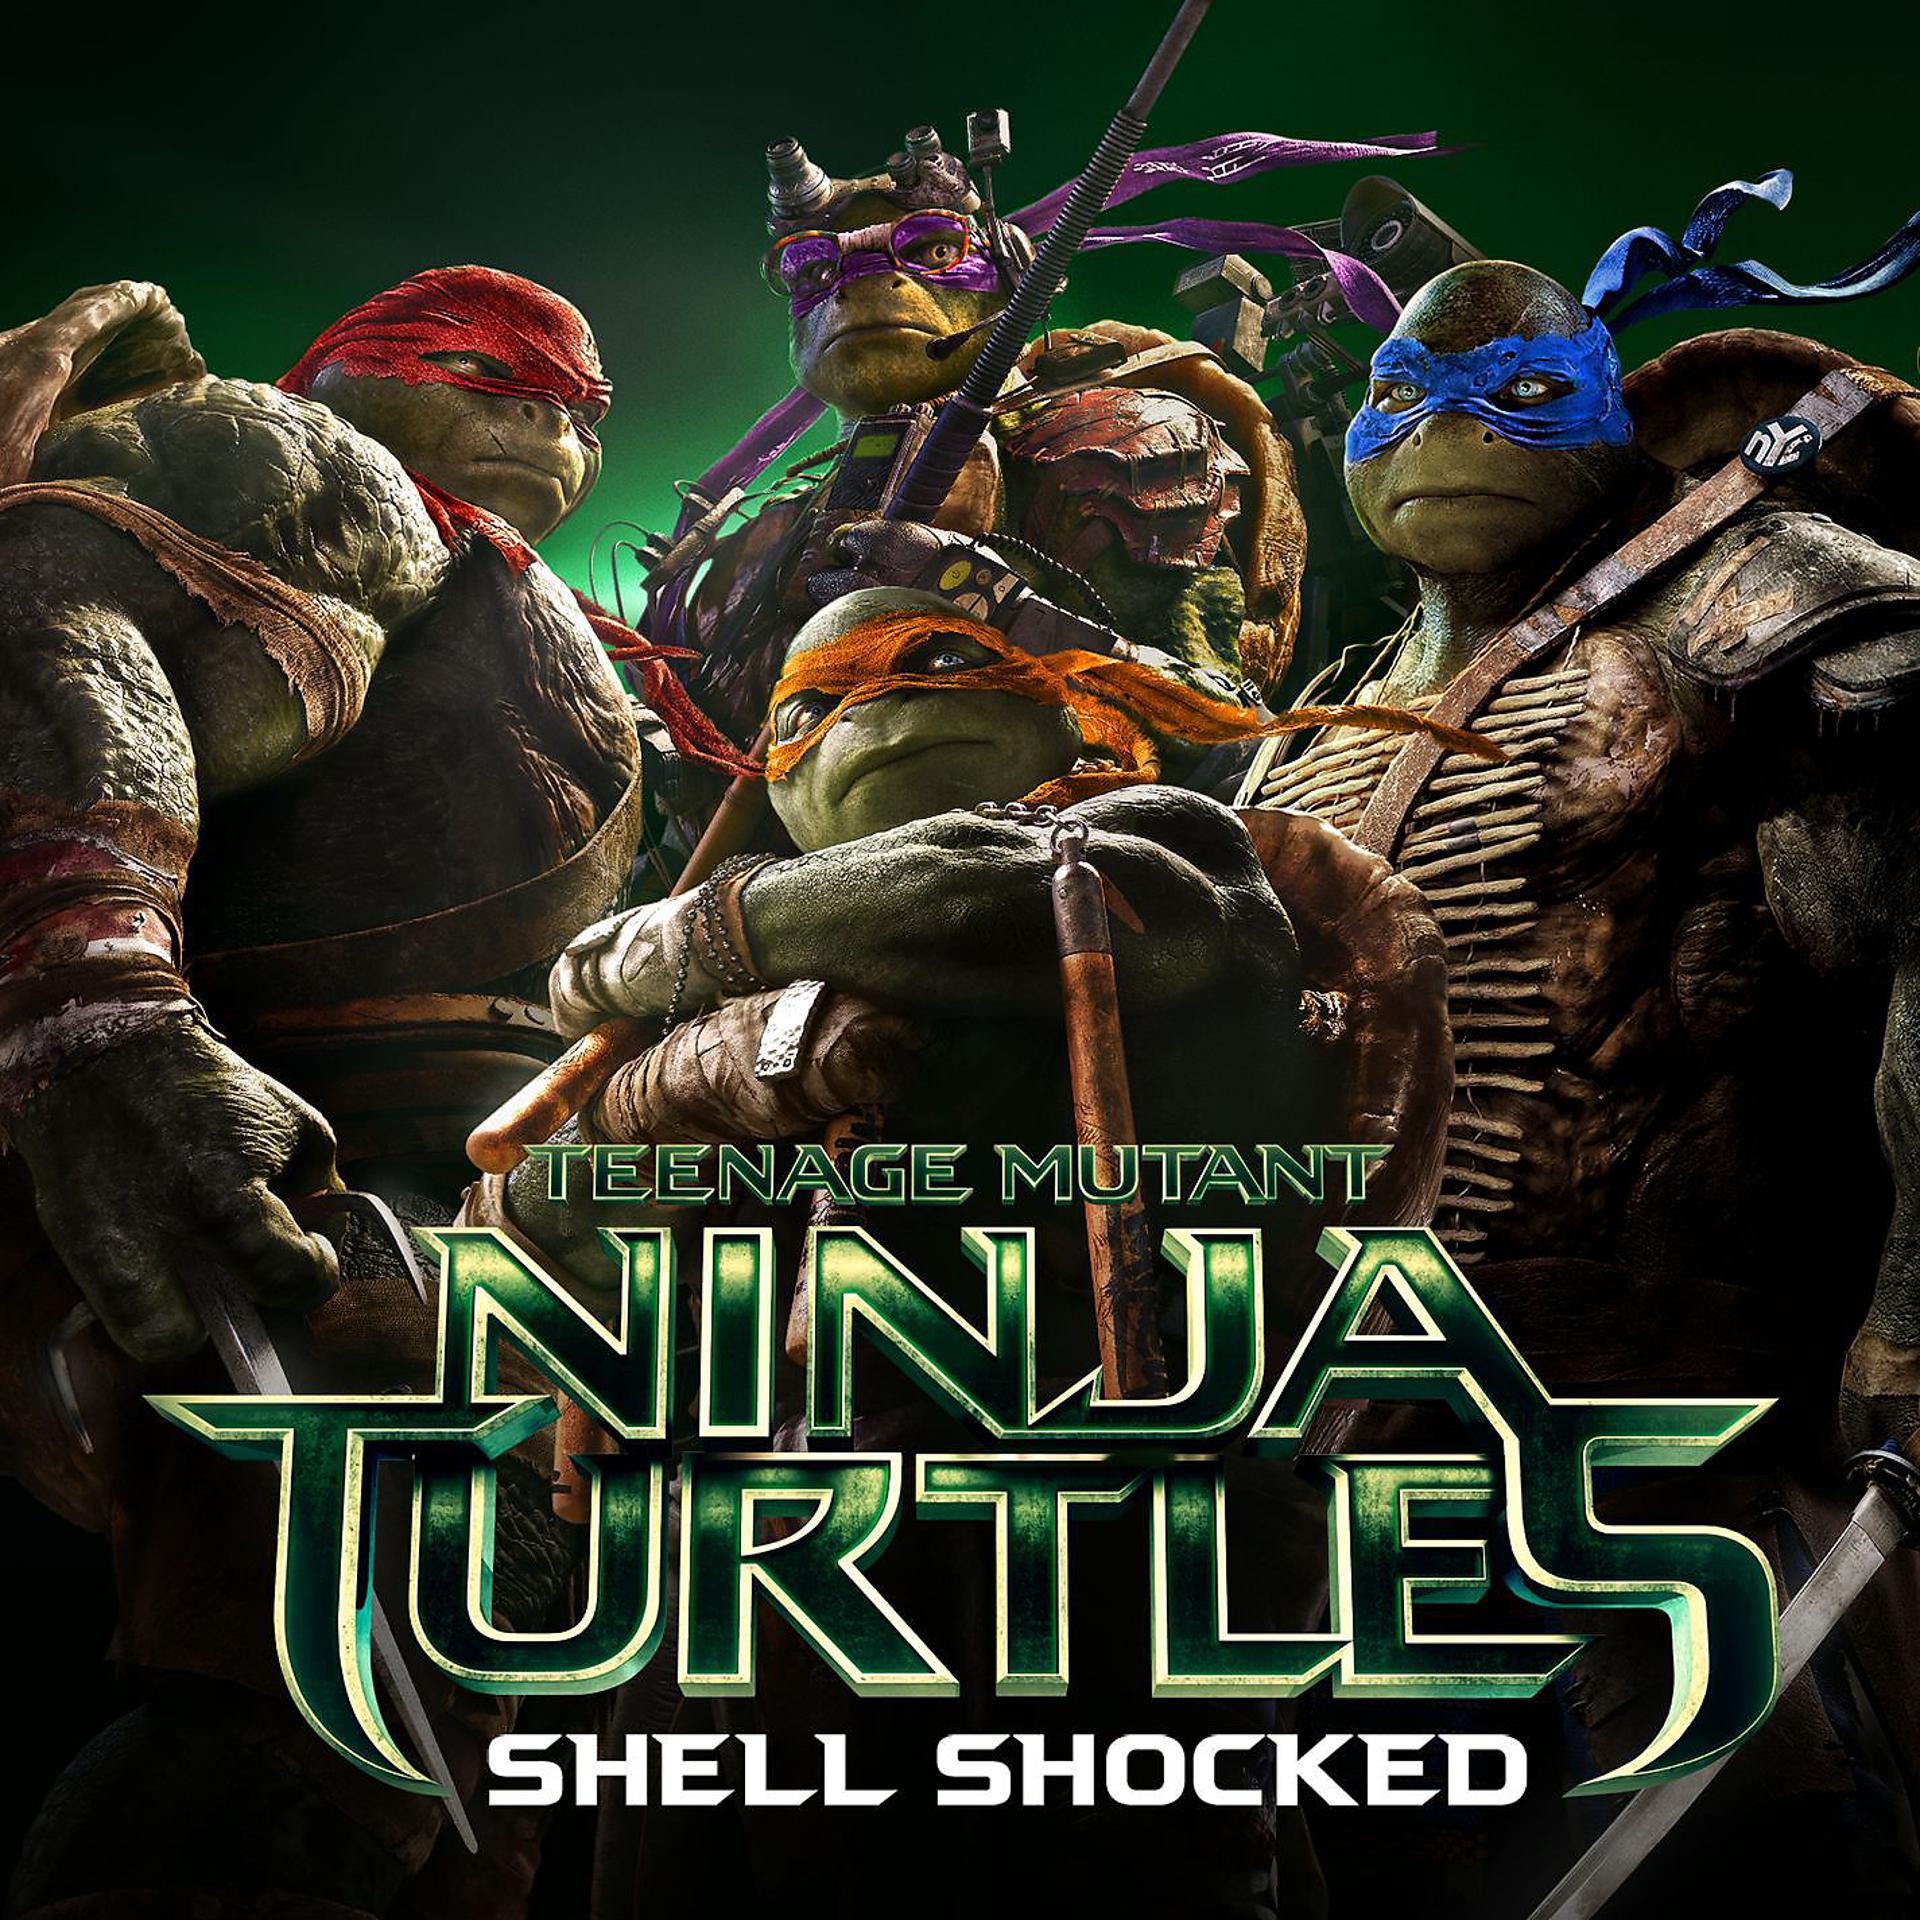 Ninja turtles песни. Черепашки ниндзя на пс3.